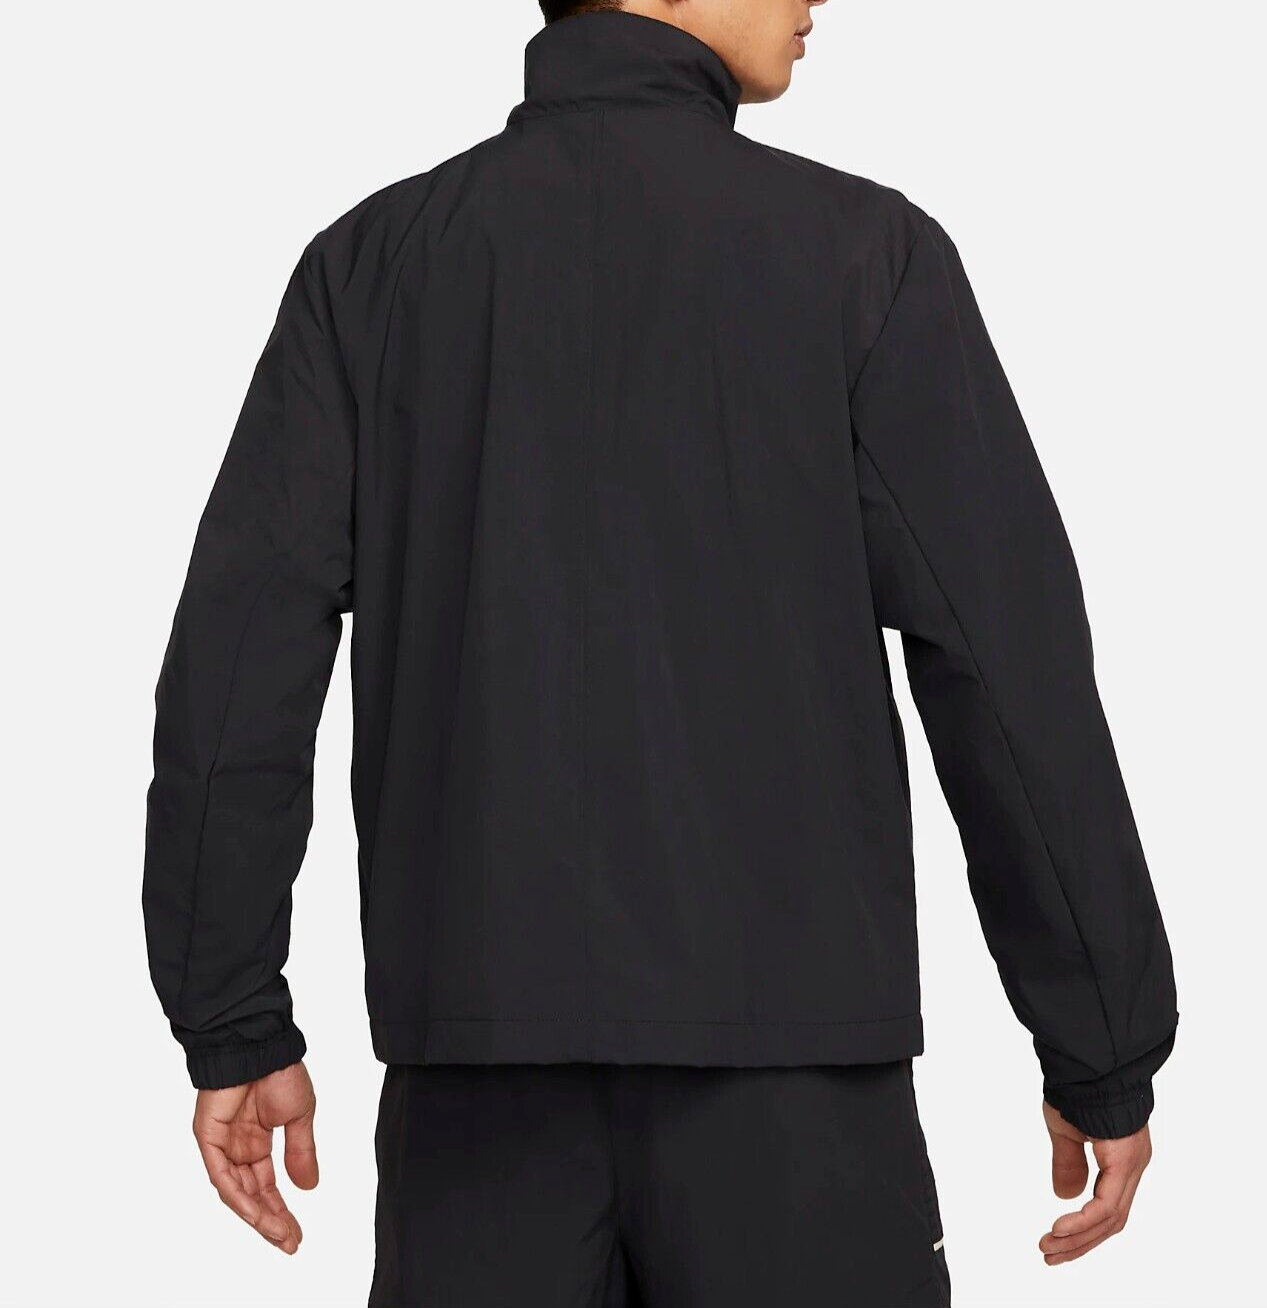 Nike Sportswear Style Essentials M65 Jacket